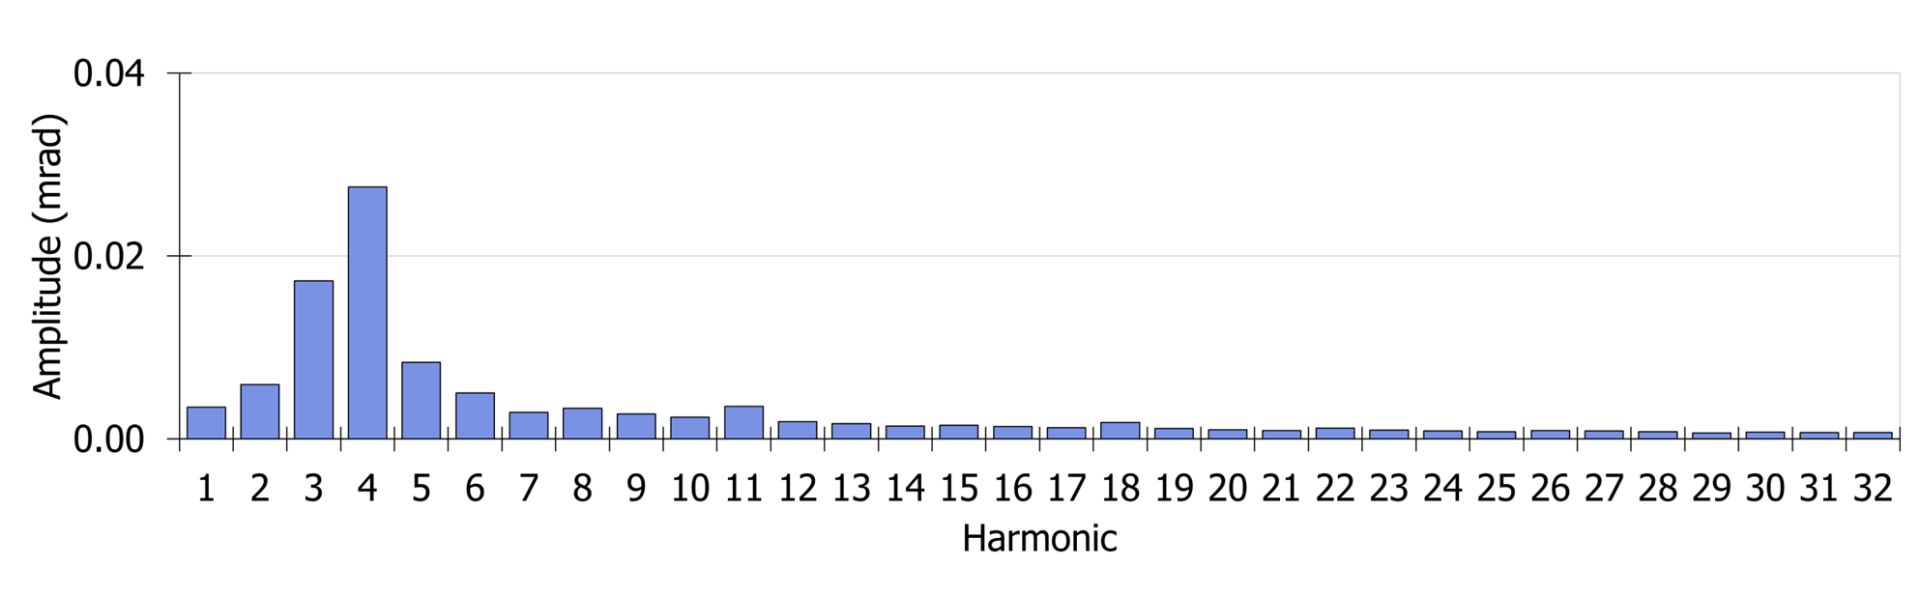 FFT Less than 4 cycles graph Amplitude (mrad), Harmonic.